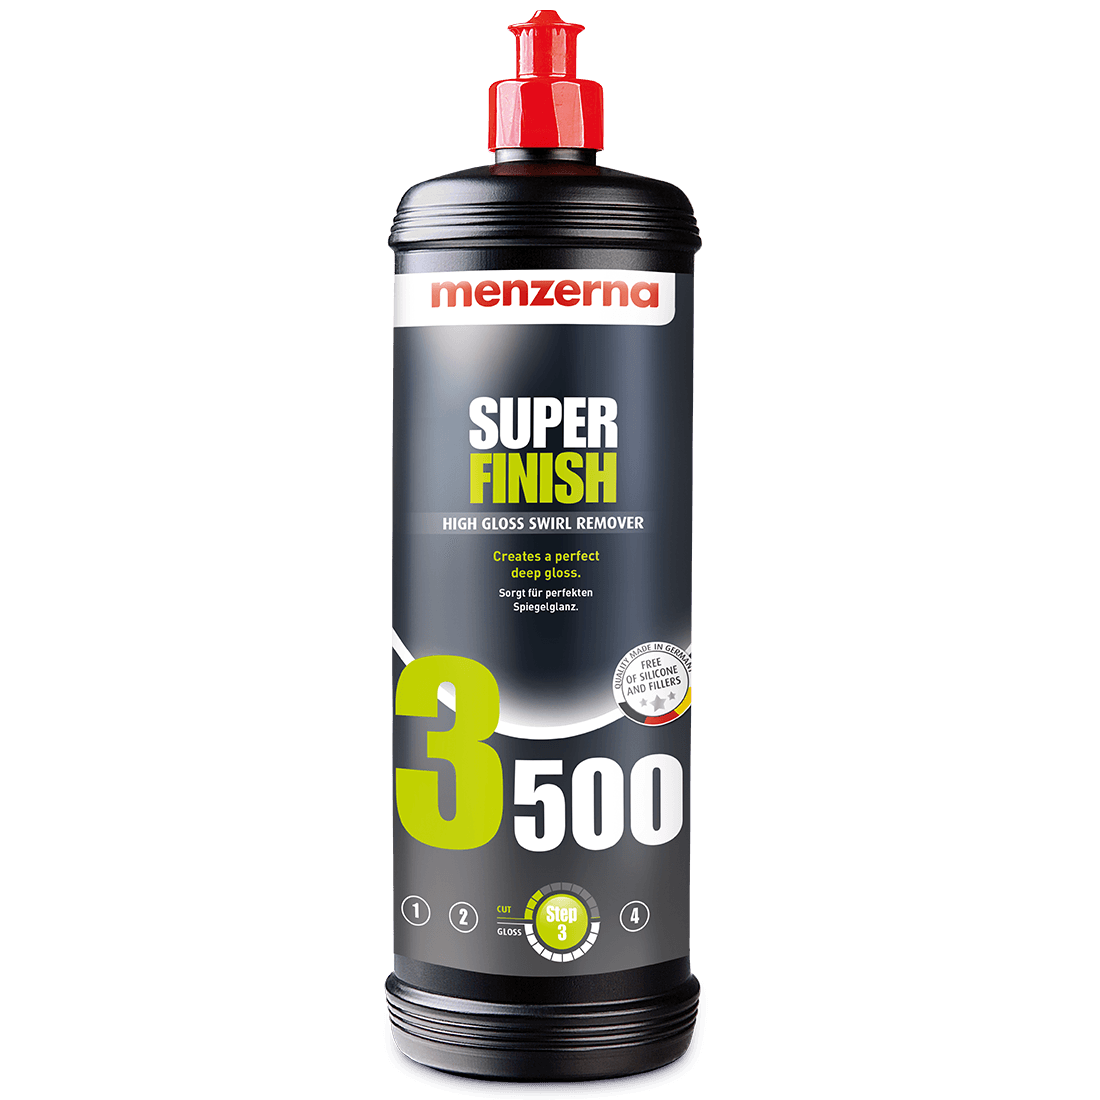 MENZERNA - Super Finish 3500 (Finishing polish)